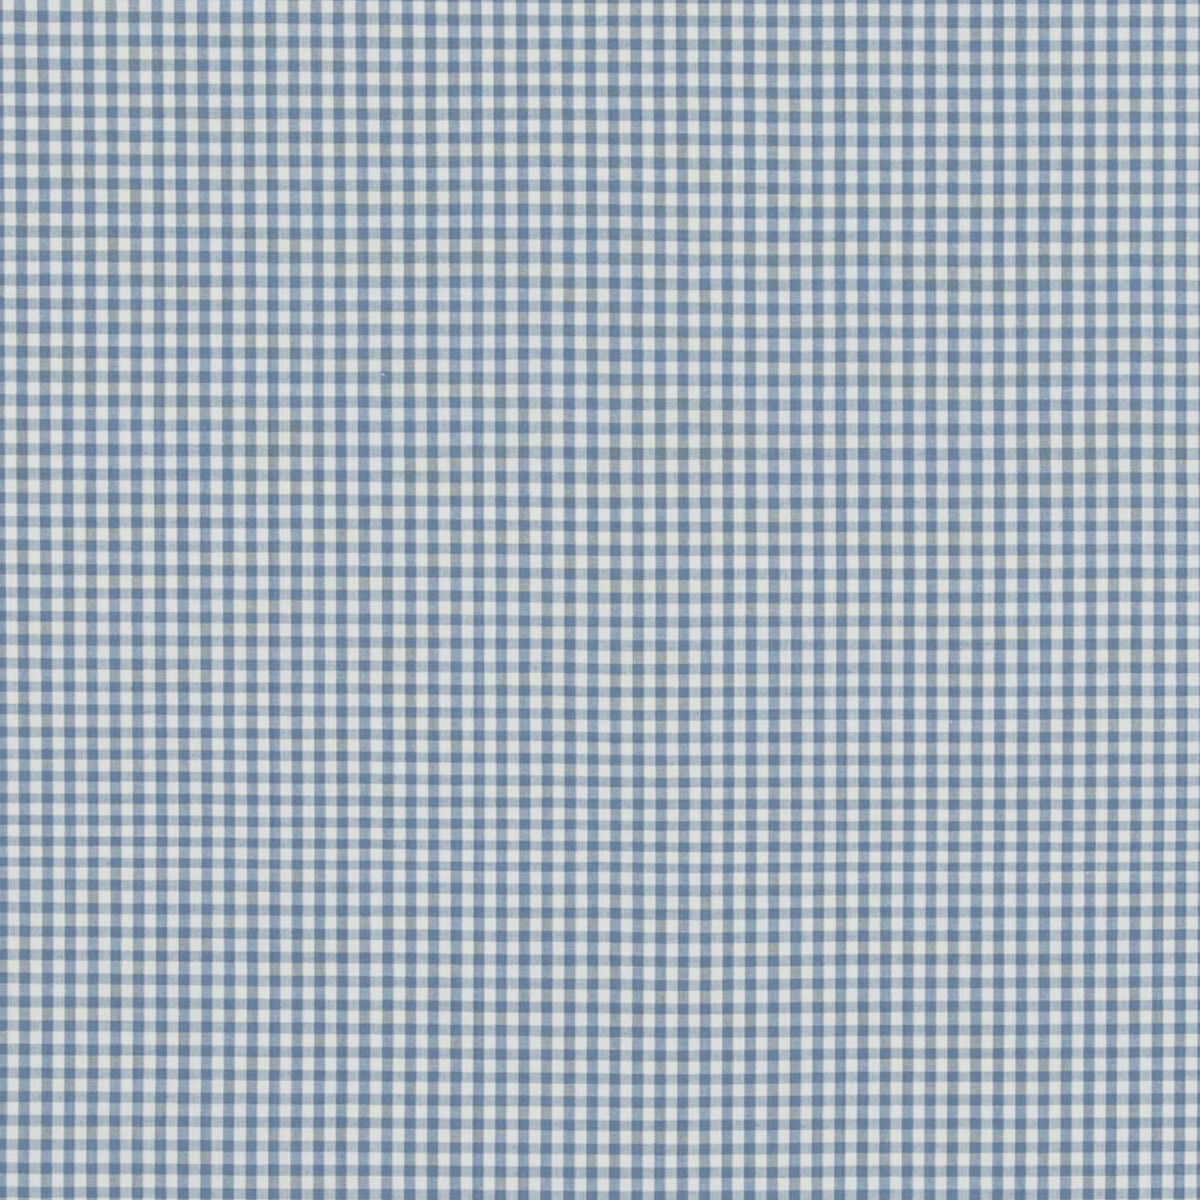 Baker Lifestyle Pf50506.605.0 Sherborne Gingham Multipurpose Fabric in Soft Blue/Blue